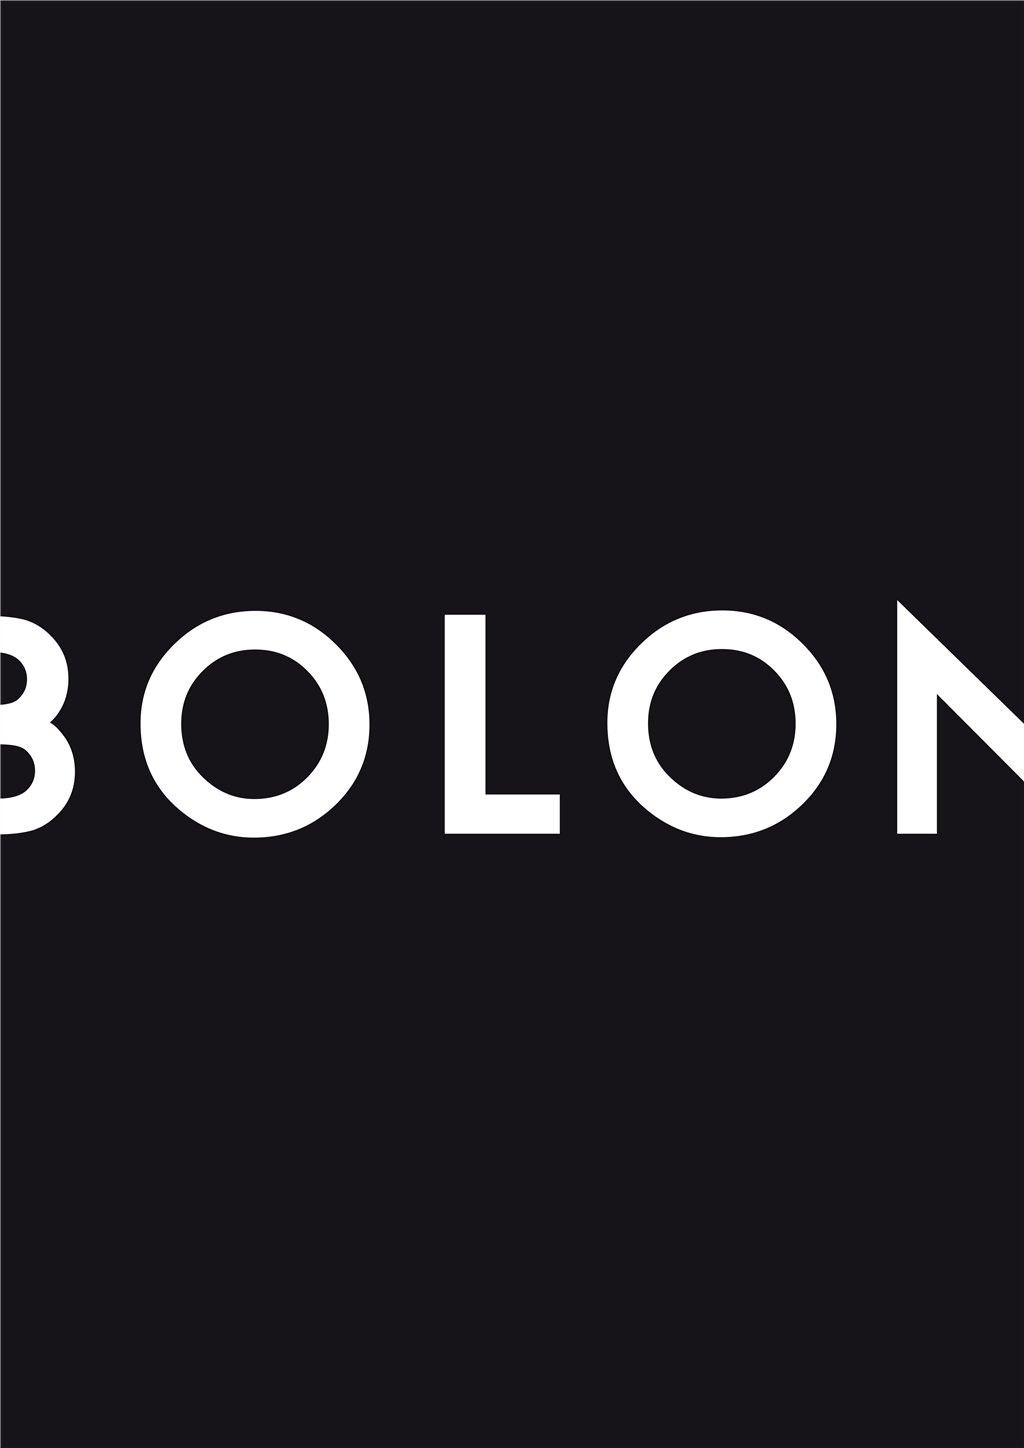 Bolon logotype, transparent .png, medium, large